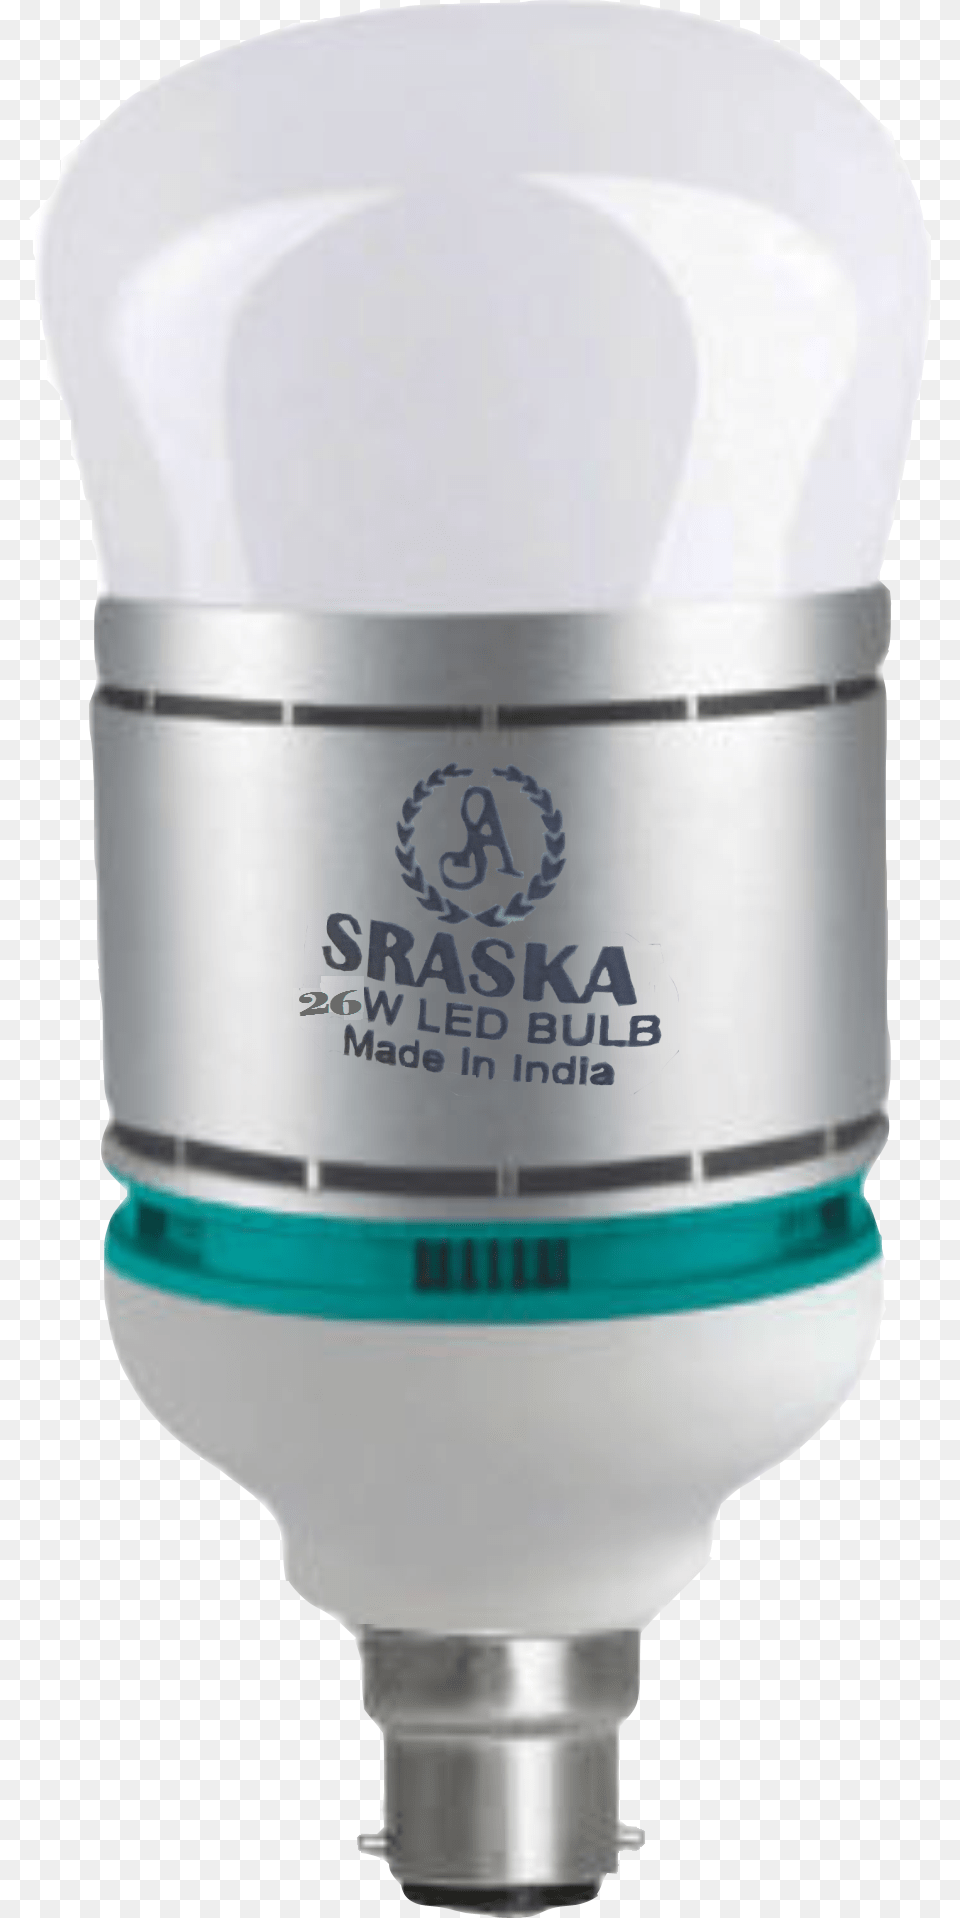 Sraska Rocket Led Lamp Cosmetics, Light, Bottle, Shaker, Electronics Free Transparent Png